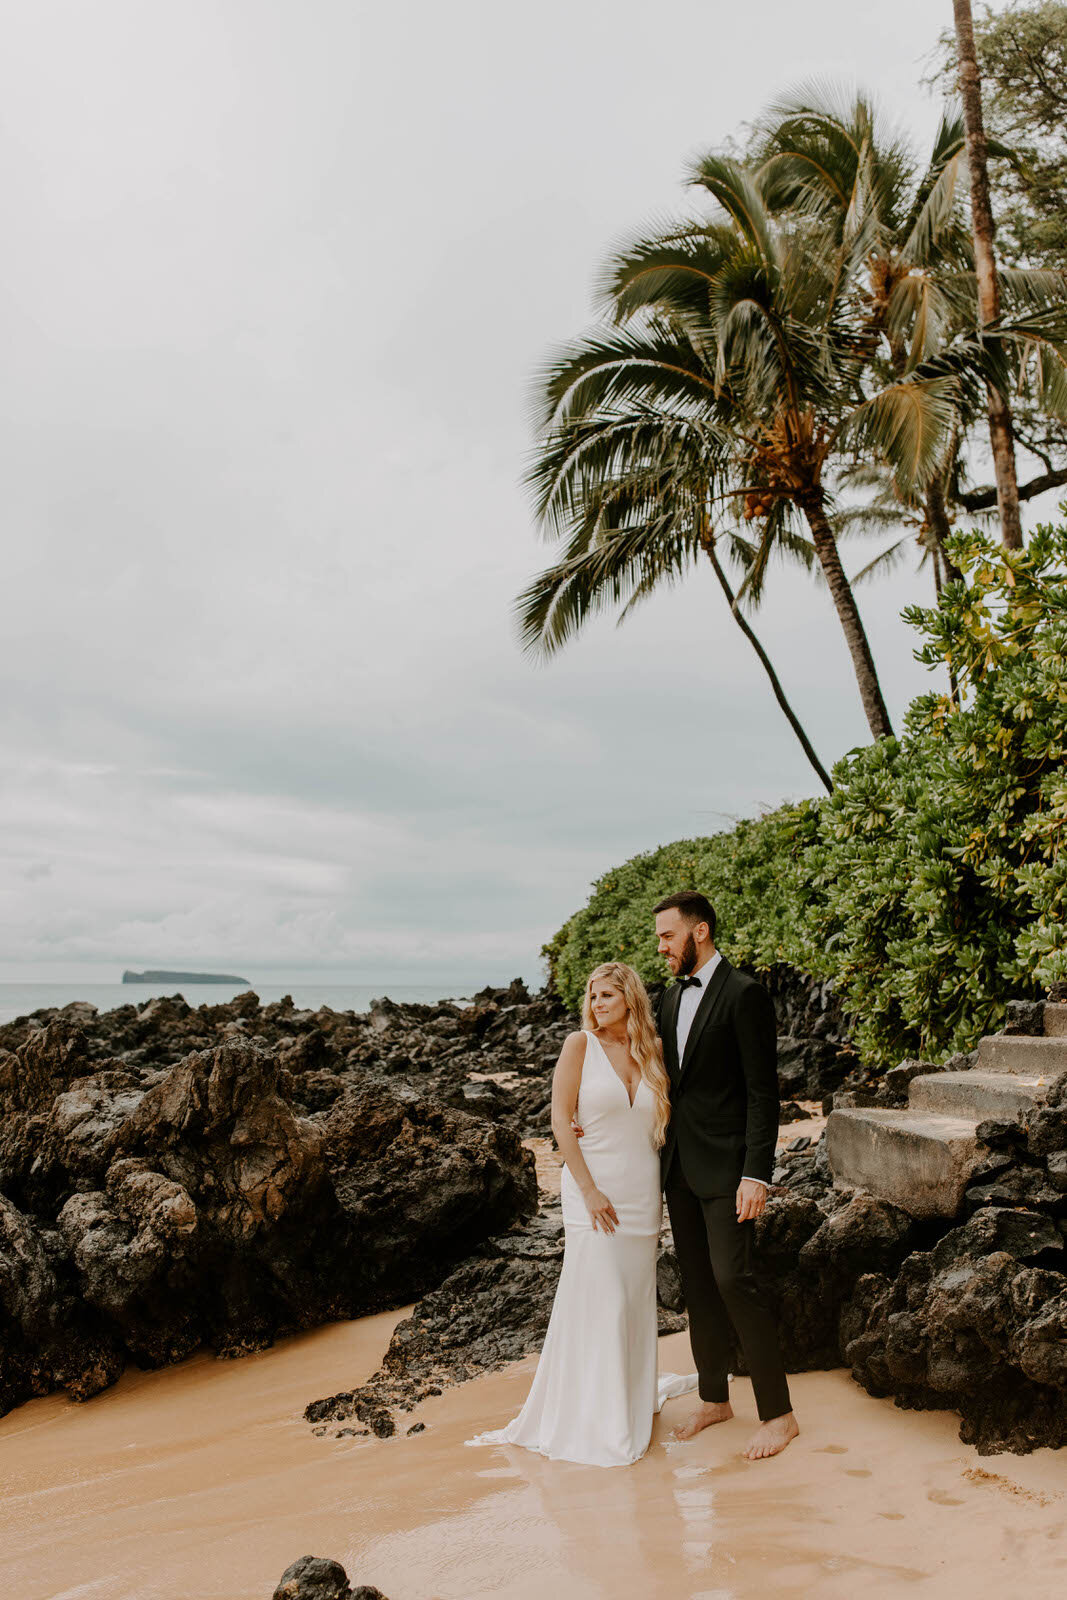 Brianna-Broyles-Photography-Fairmont-Kea-Lani-Wedding-Maui-Photographer-66.jpg